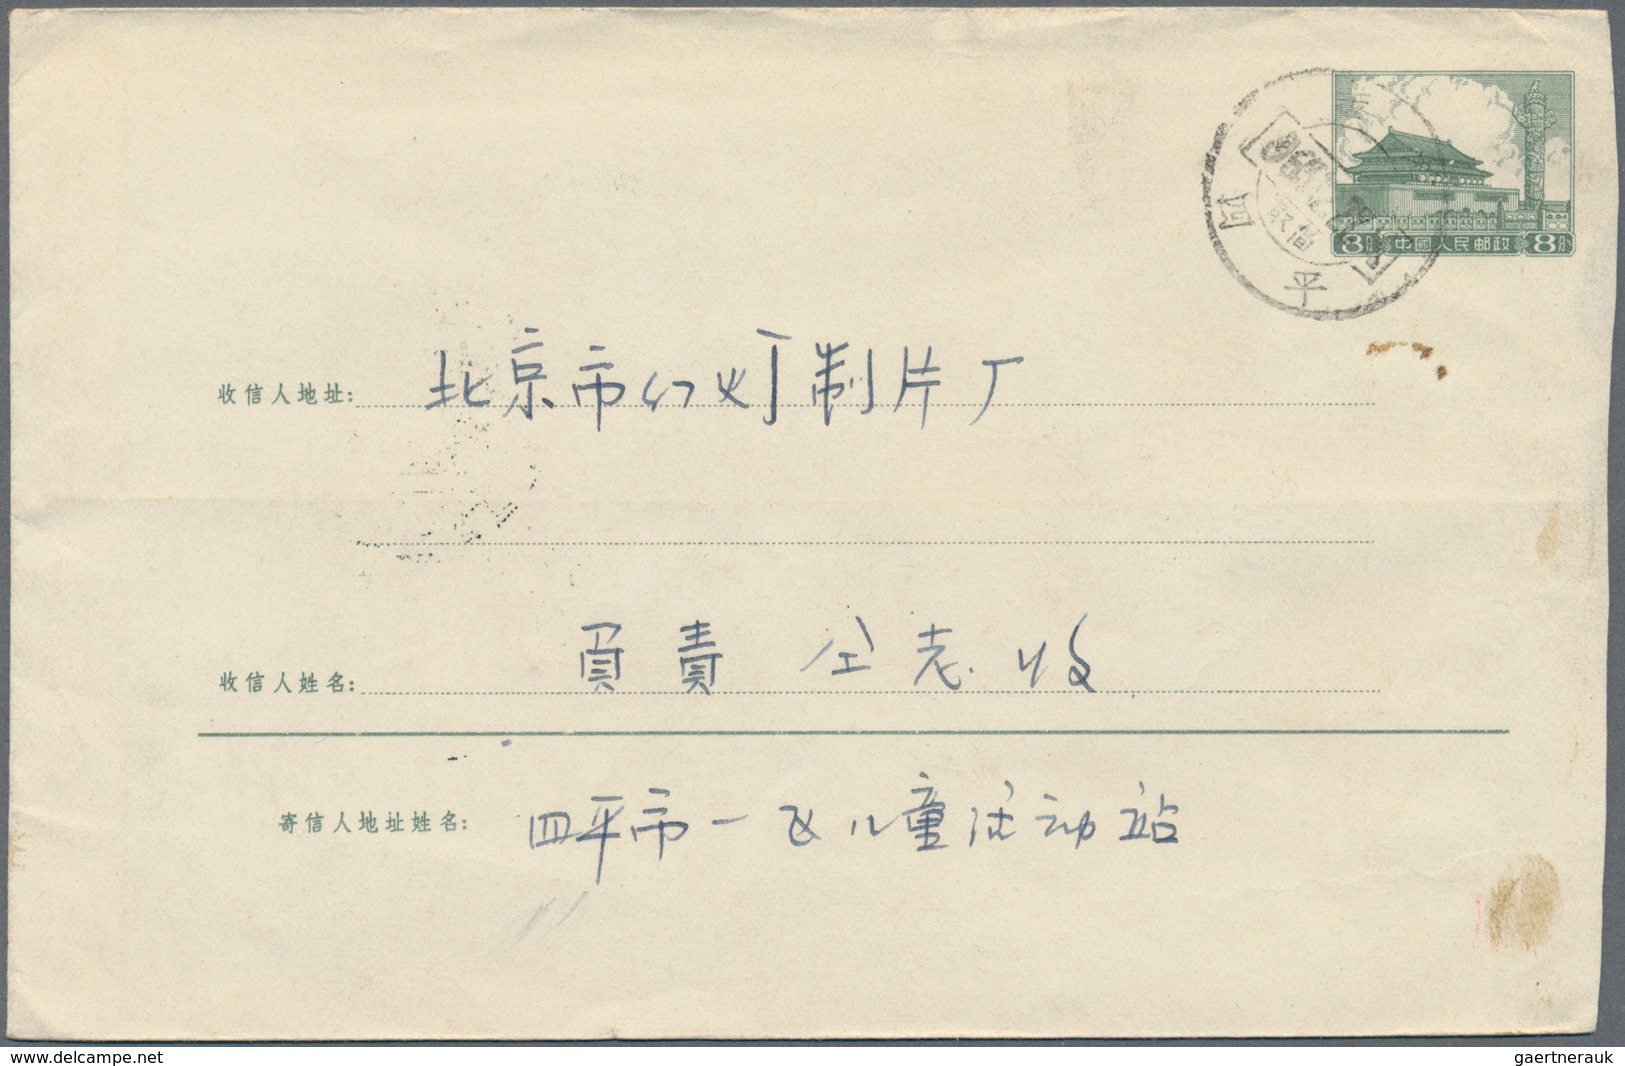 China - Volksrepublik - Ganzsachen: 1956/65, stationery envelopes 8 f. grey or green (14) with print